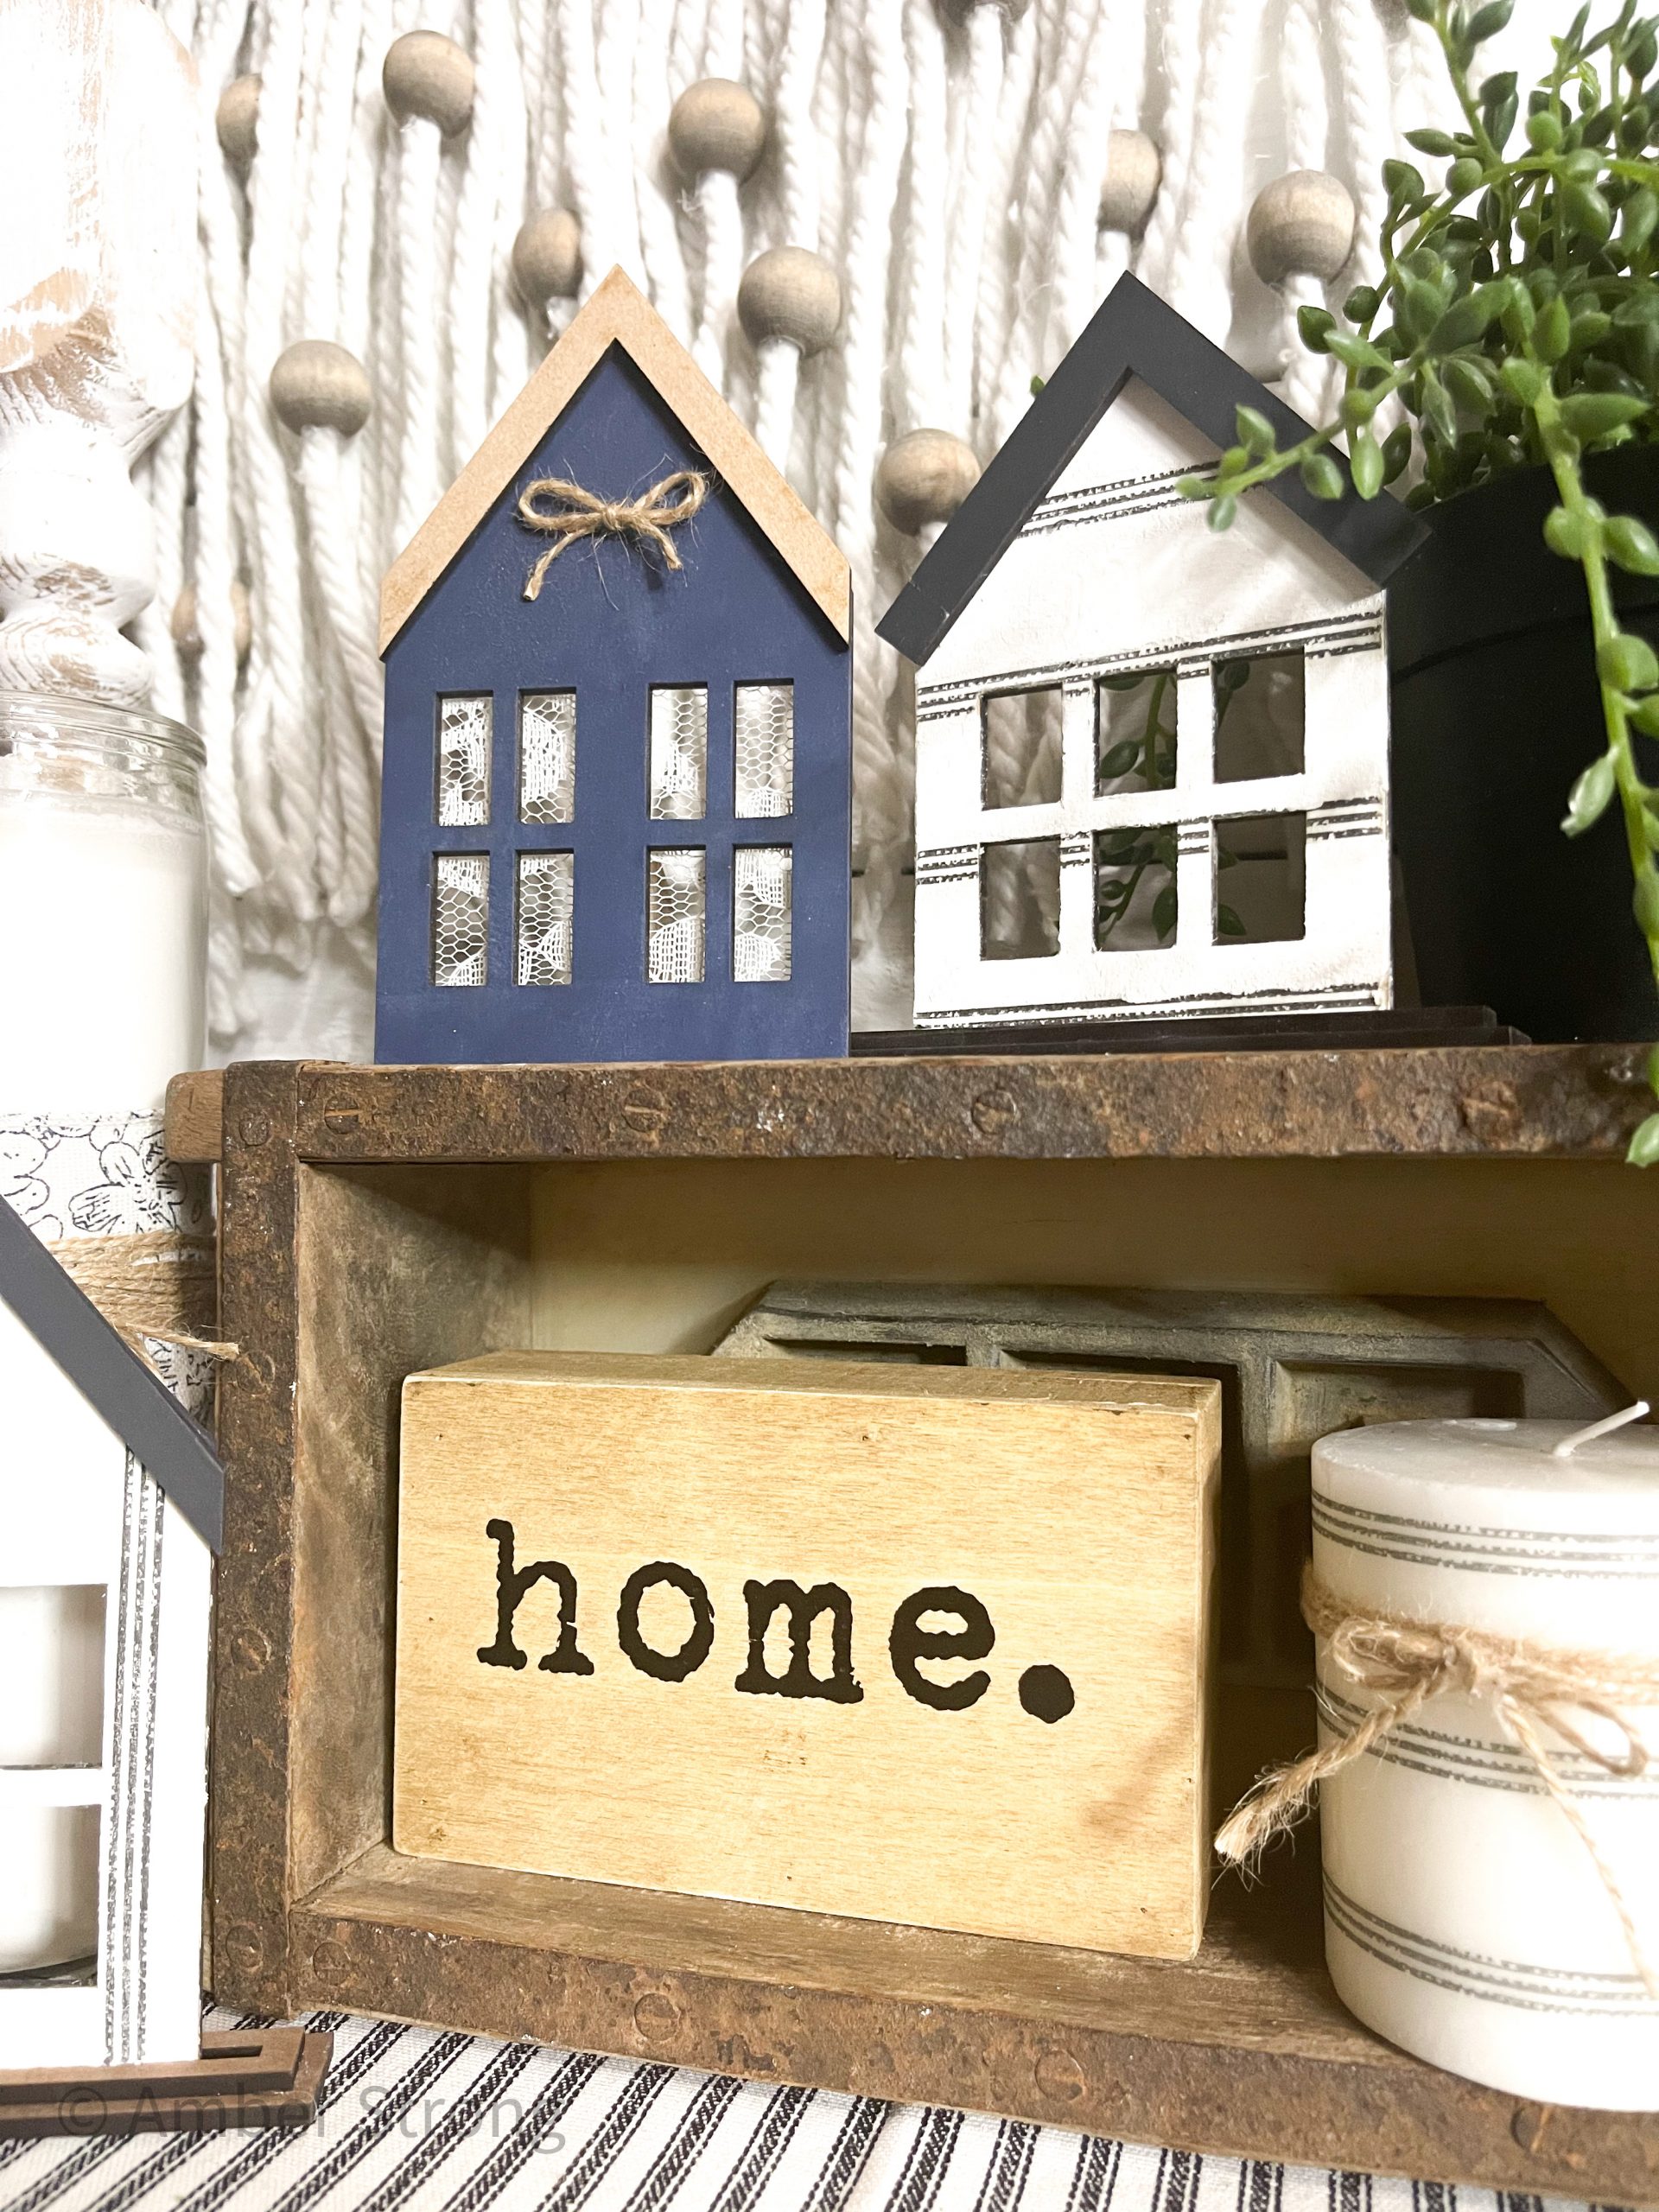 DIY Decorative Houses Craft Kit - Easy DIY Idea